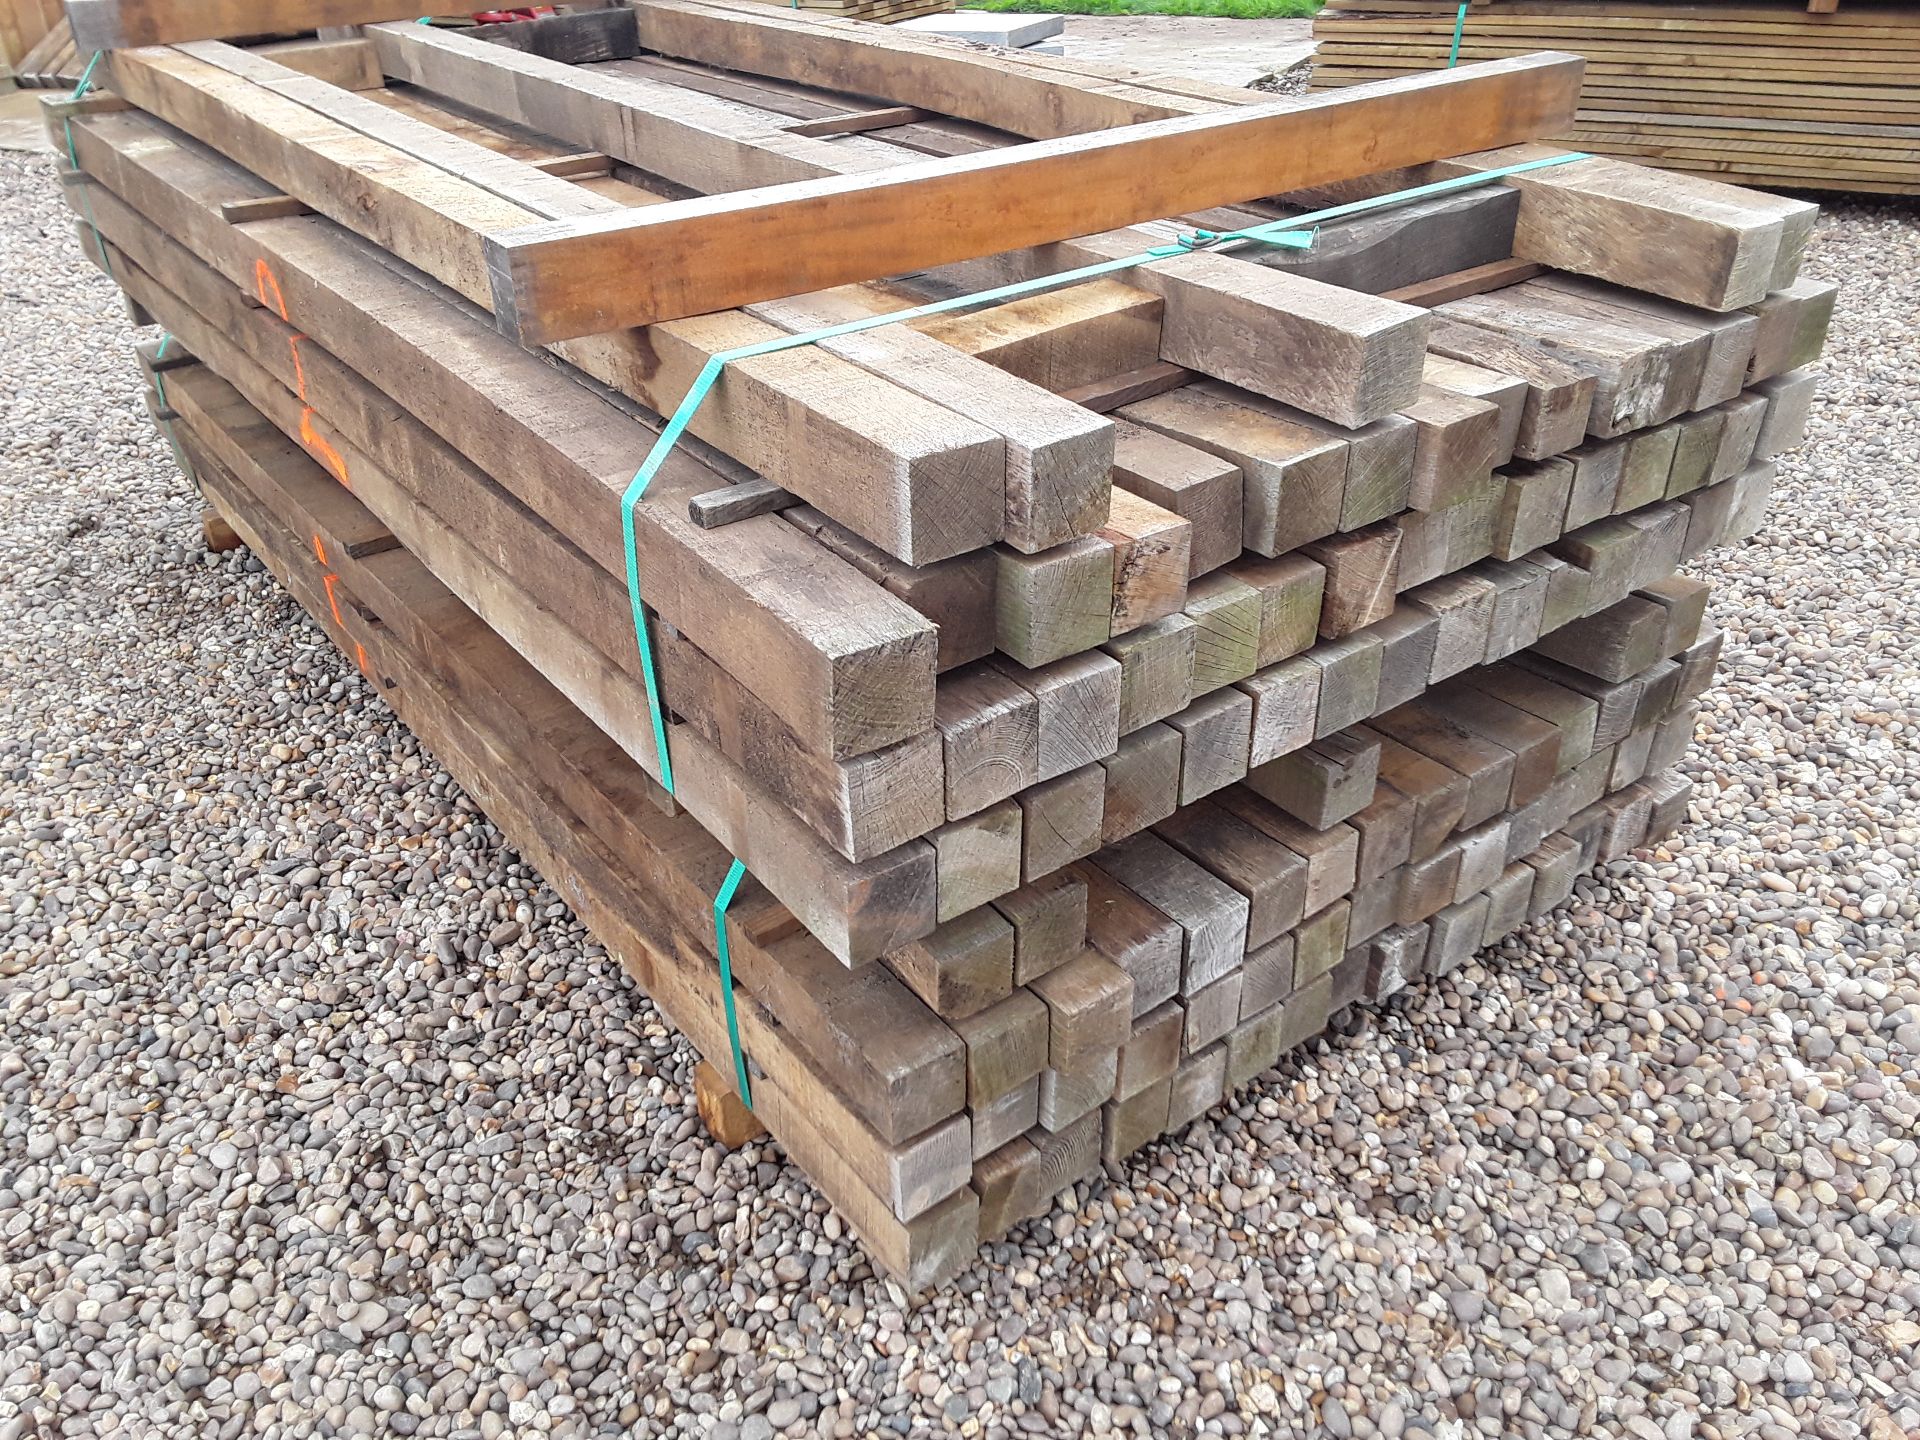 50 x Hardwood Air Dried Rustic Sawn English Oak Timber Posts - Image 2 of 5